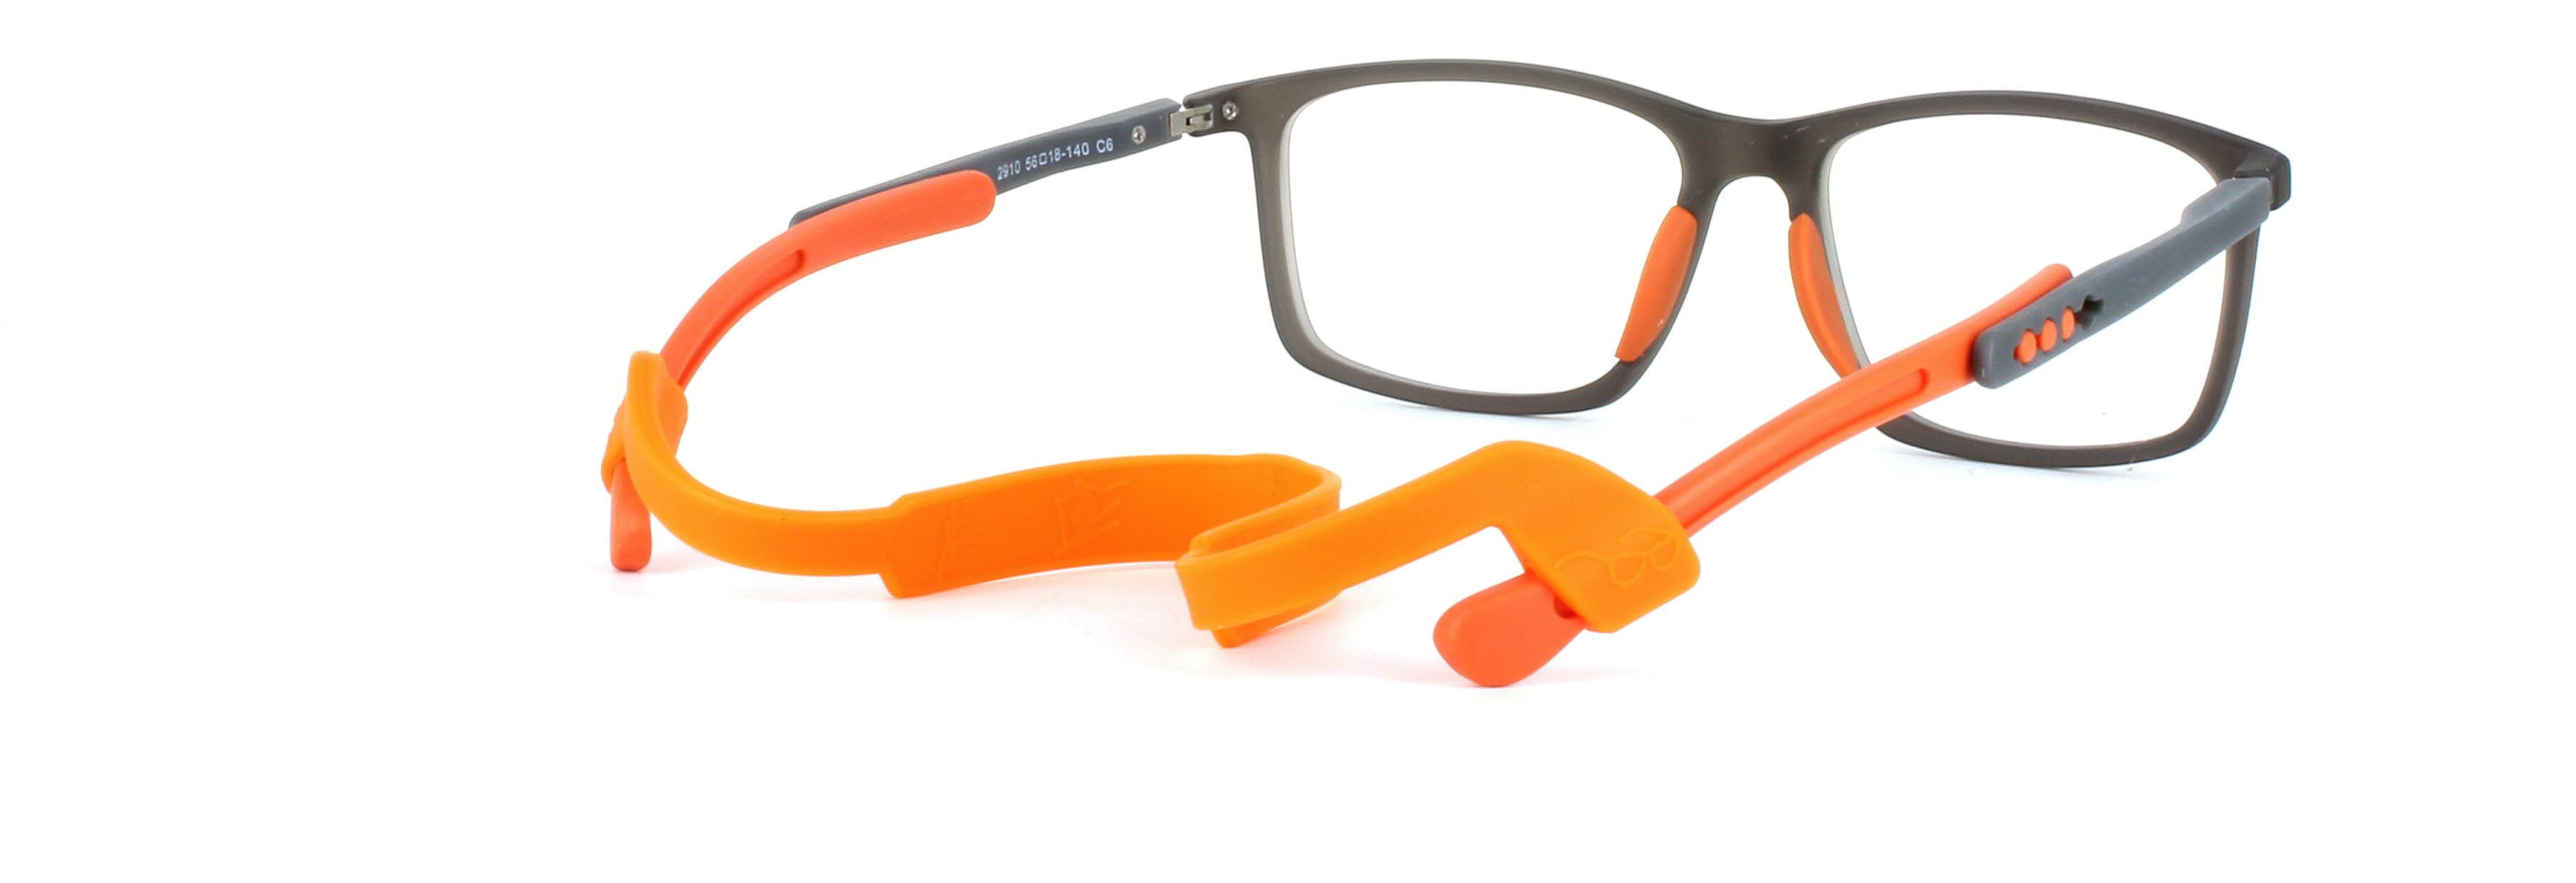 Player - Gents prescription sports glasses - grey and orange - image 4